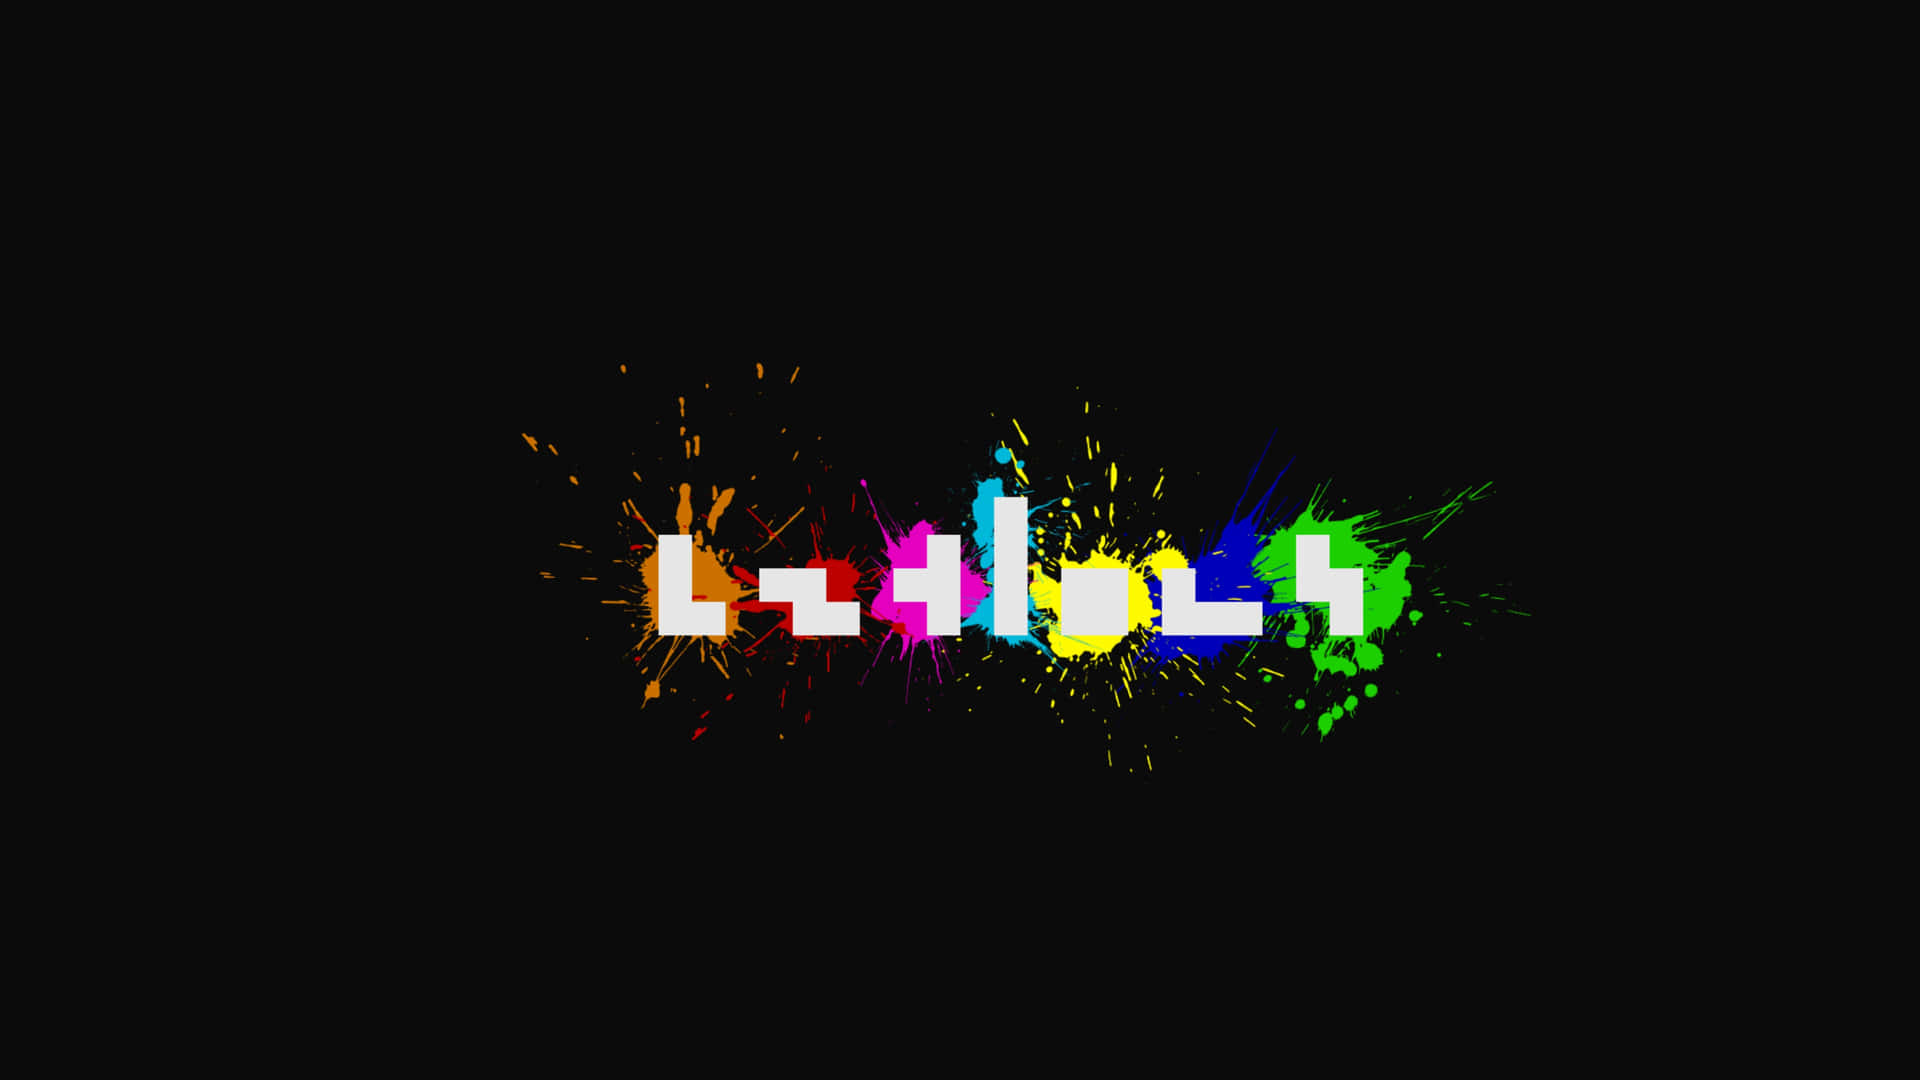 Vibrant Tetris blocks raining down in a high-resolution background